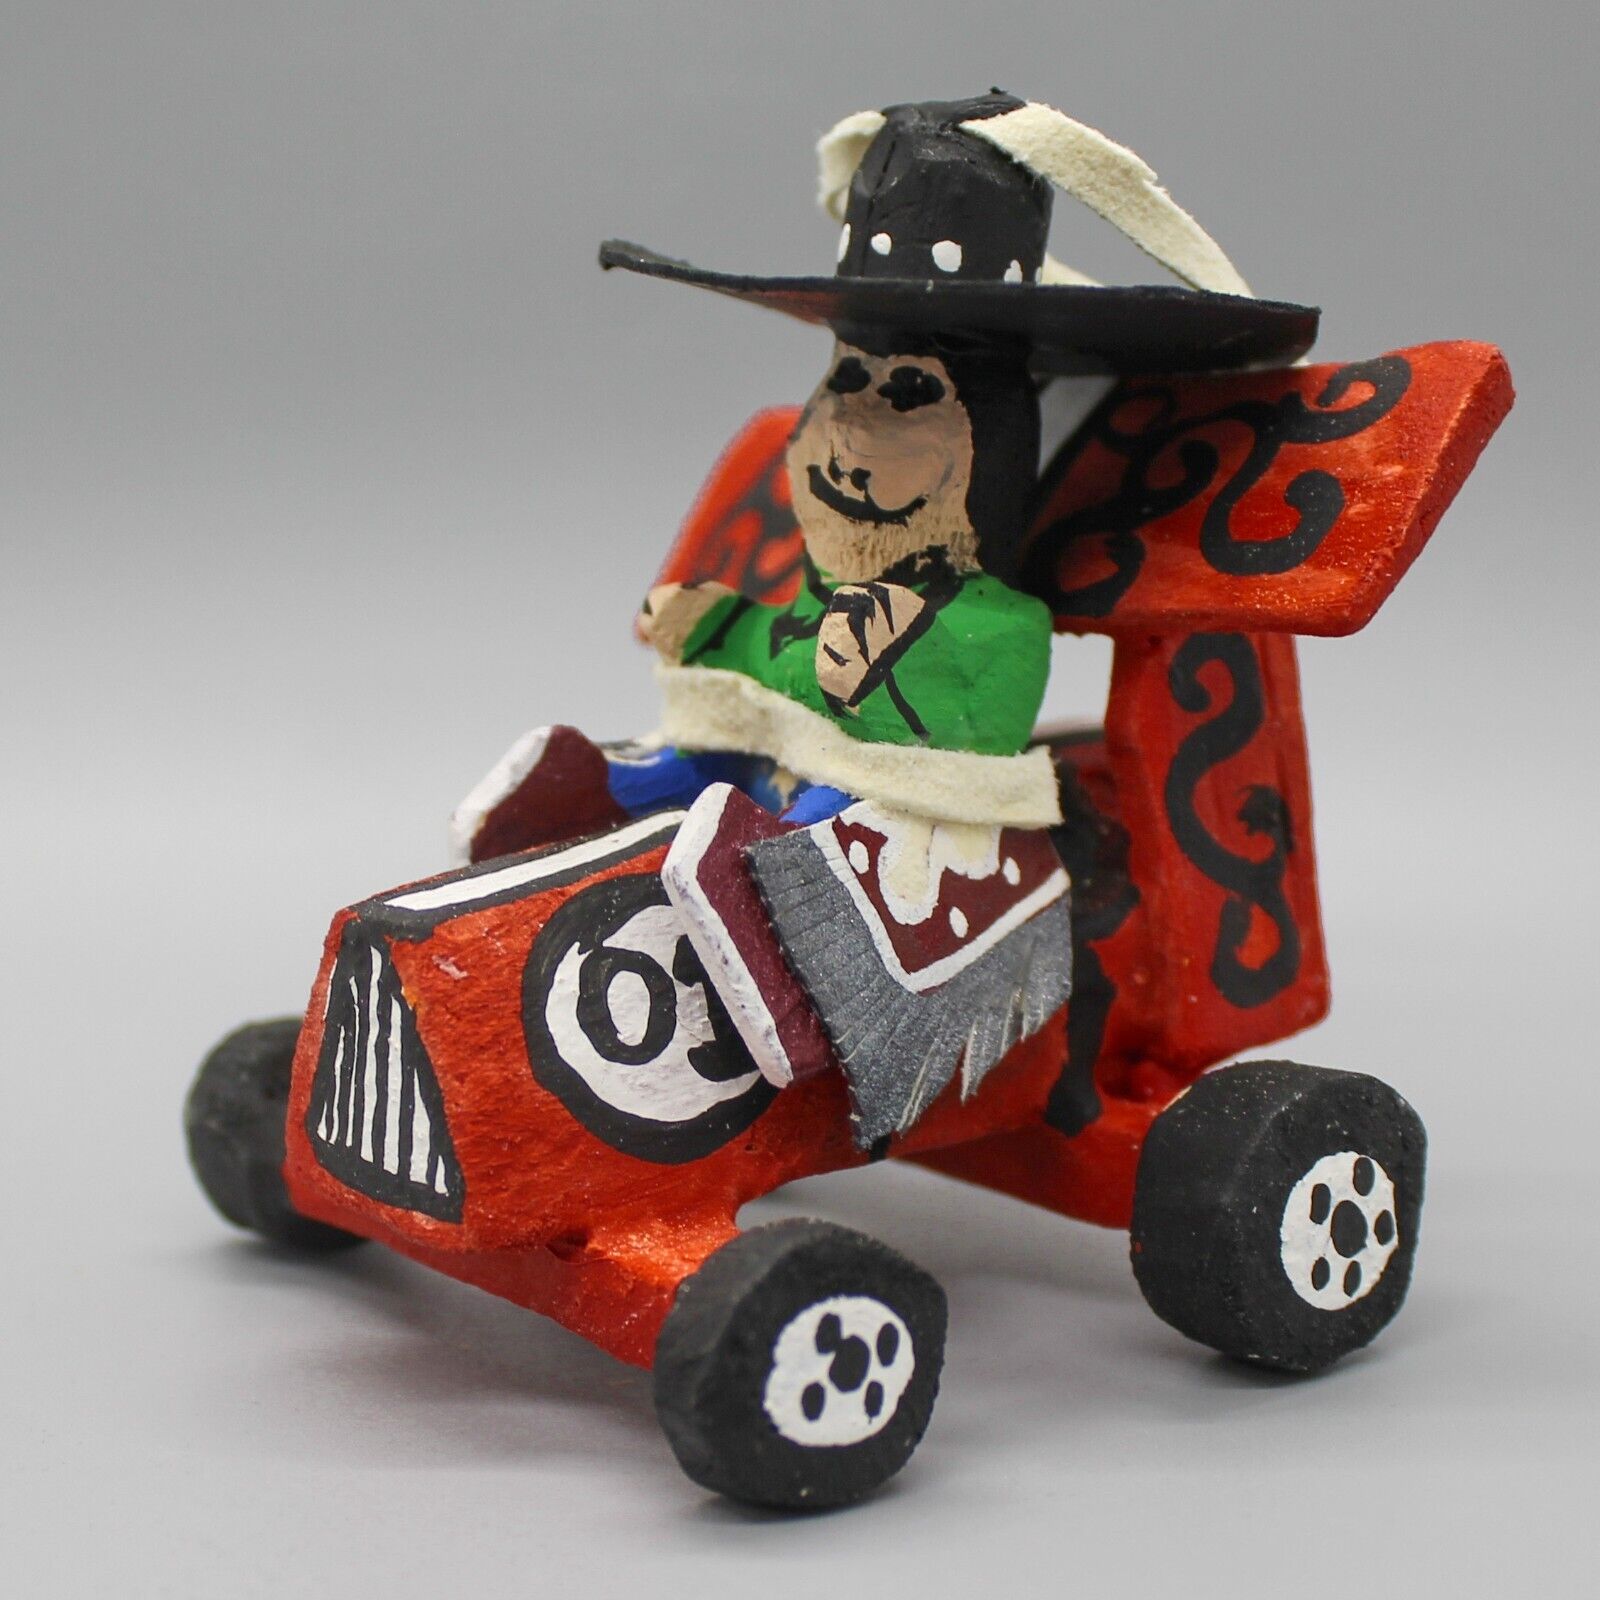 NAVAJO FOLK ART-COWBOY DRIVING RACE CAR ORNAMENT by DELBERT BUCK-NATIVE AMERICAN